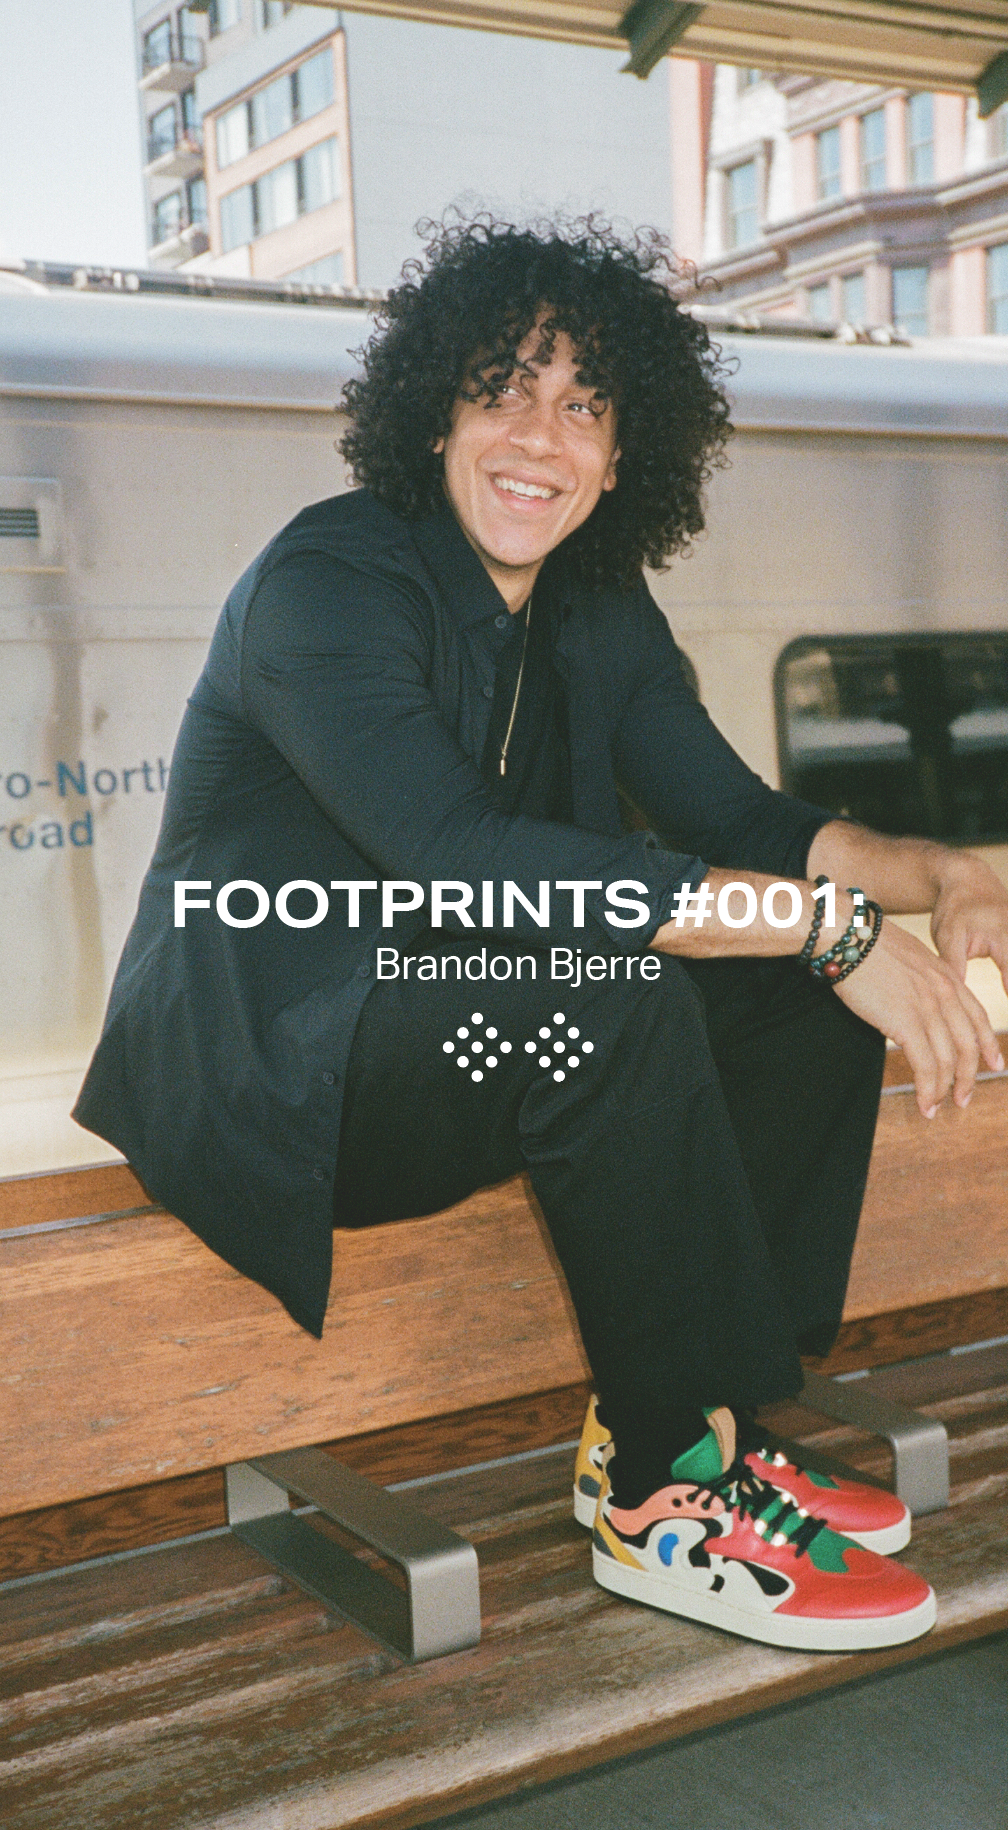 Footprints 001: Brandon Bjerre